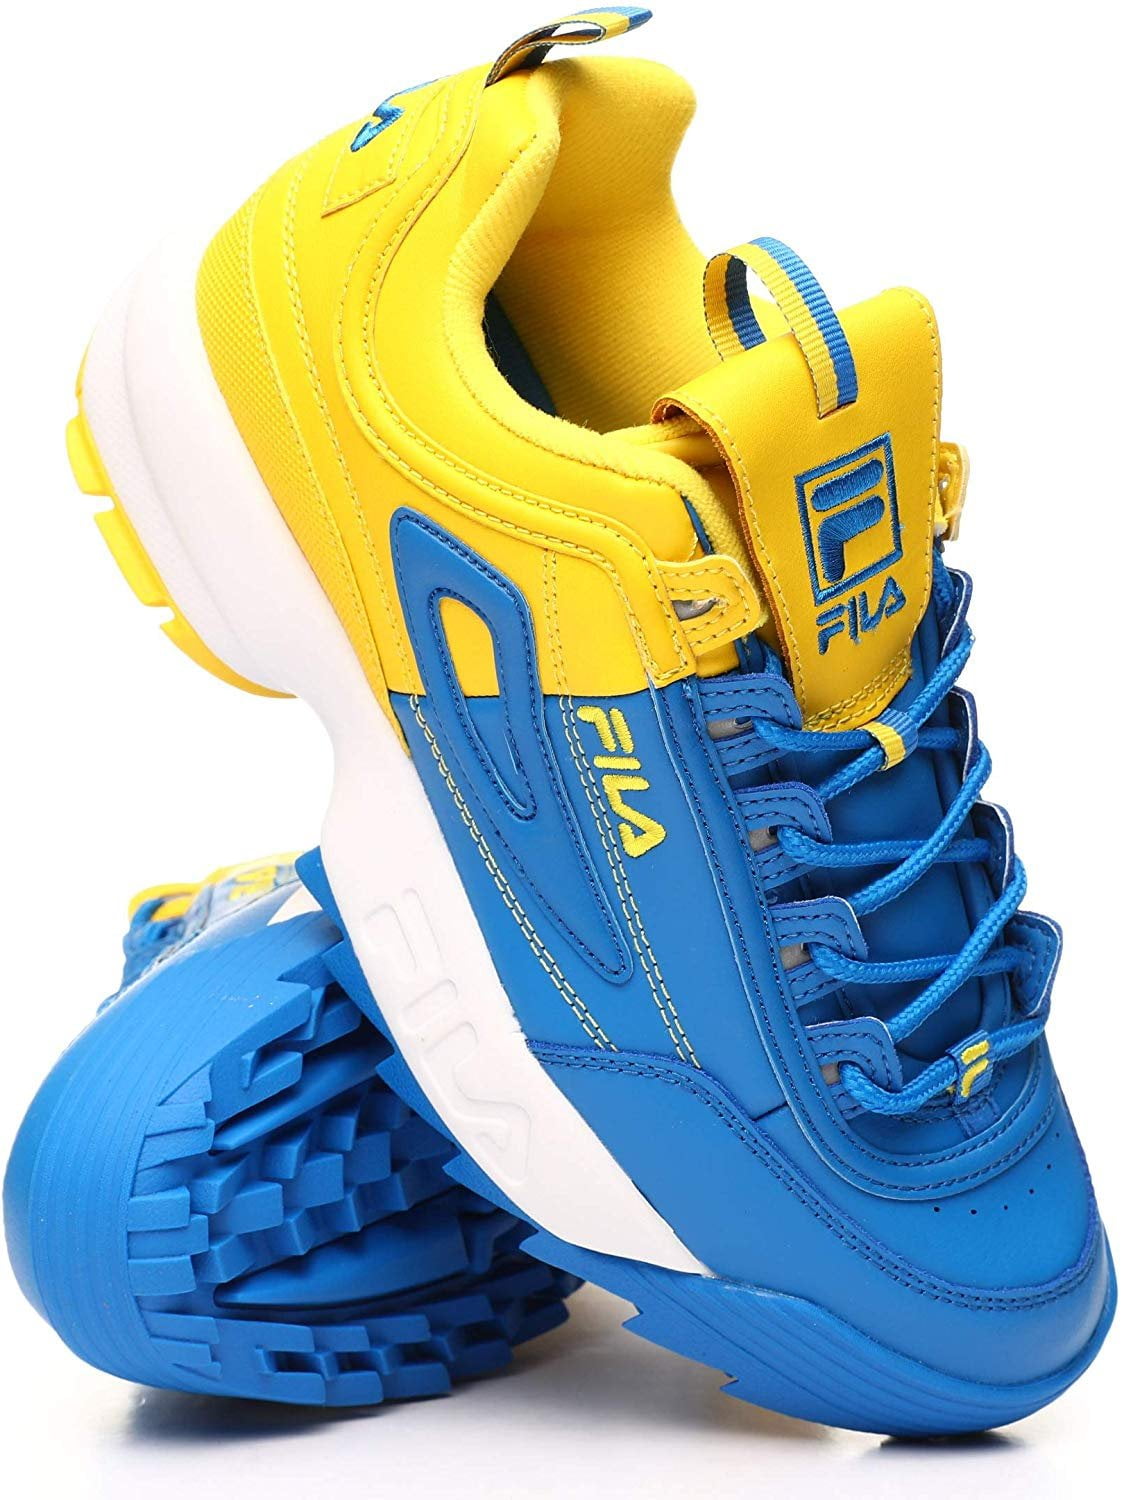 Disruptor II Split Sneaker (10, Lemon/Electric Blue/White) - Walmart.com